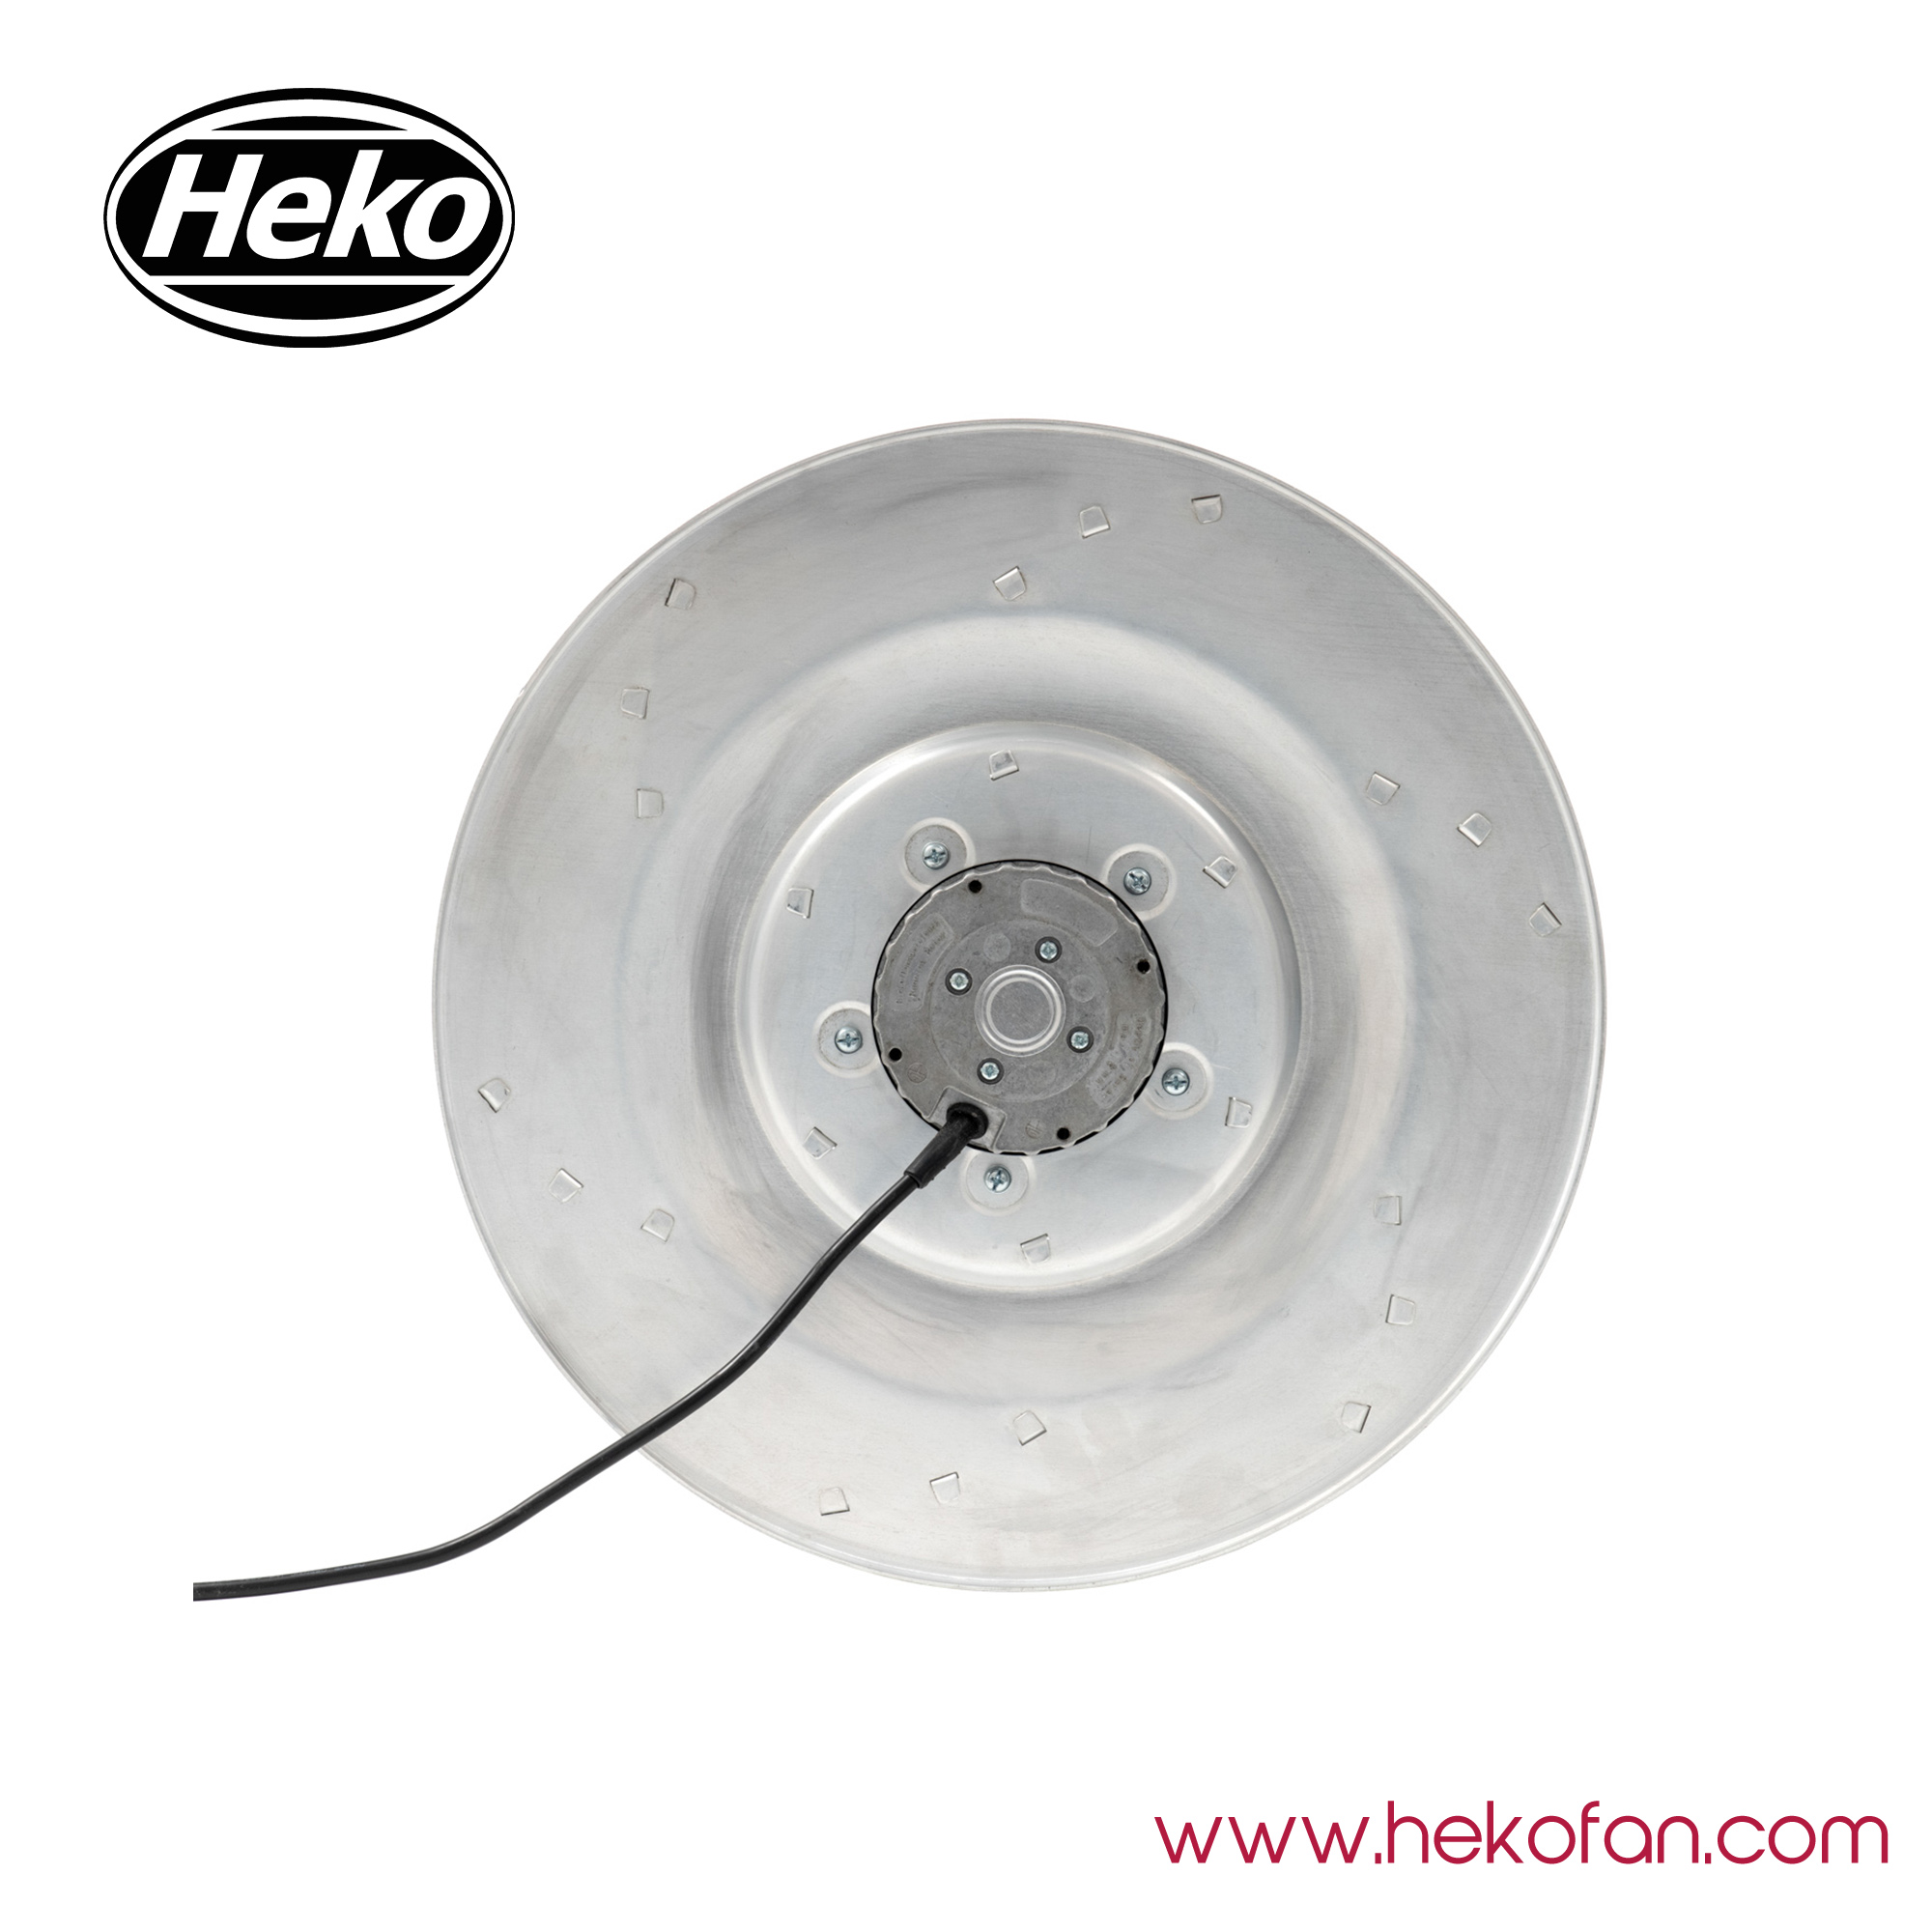 HEKO DC400mm 48VDC High Speed Centrifugal Chimney Fan